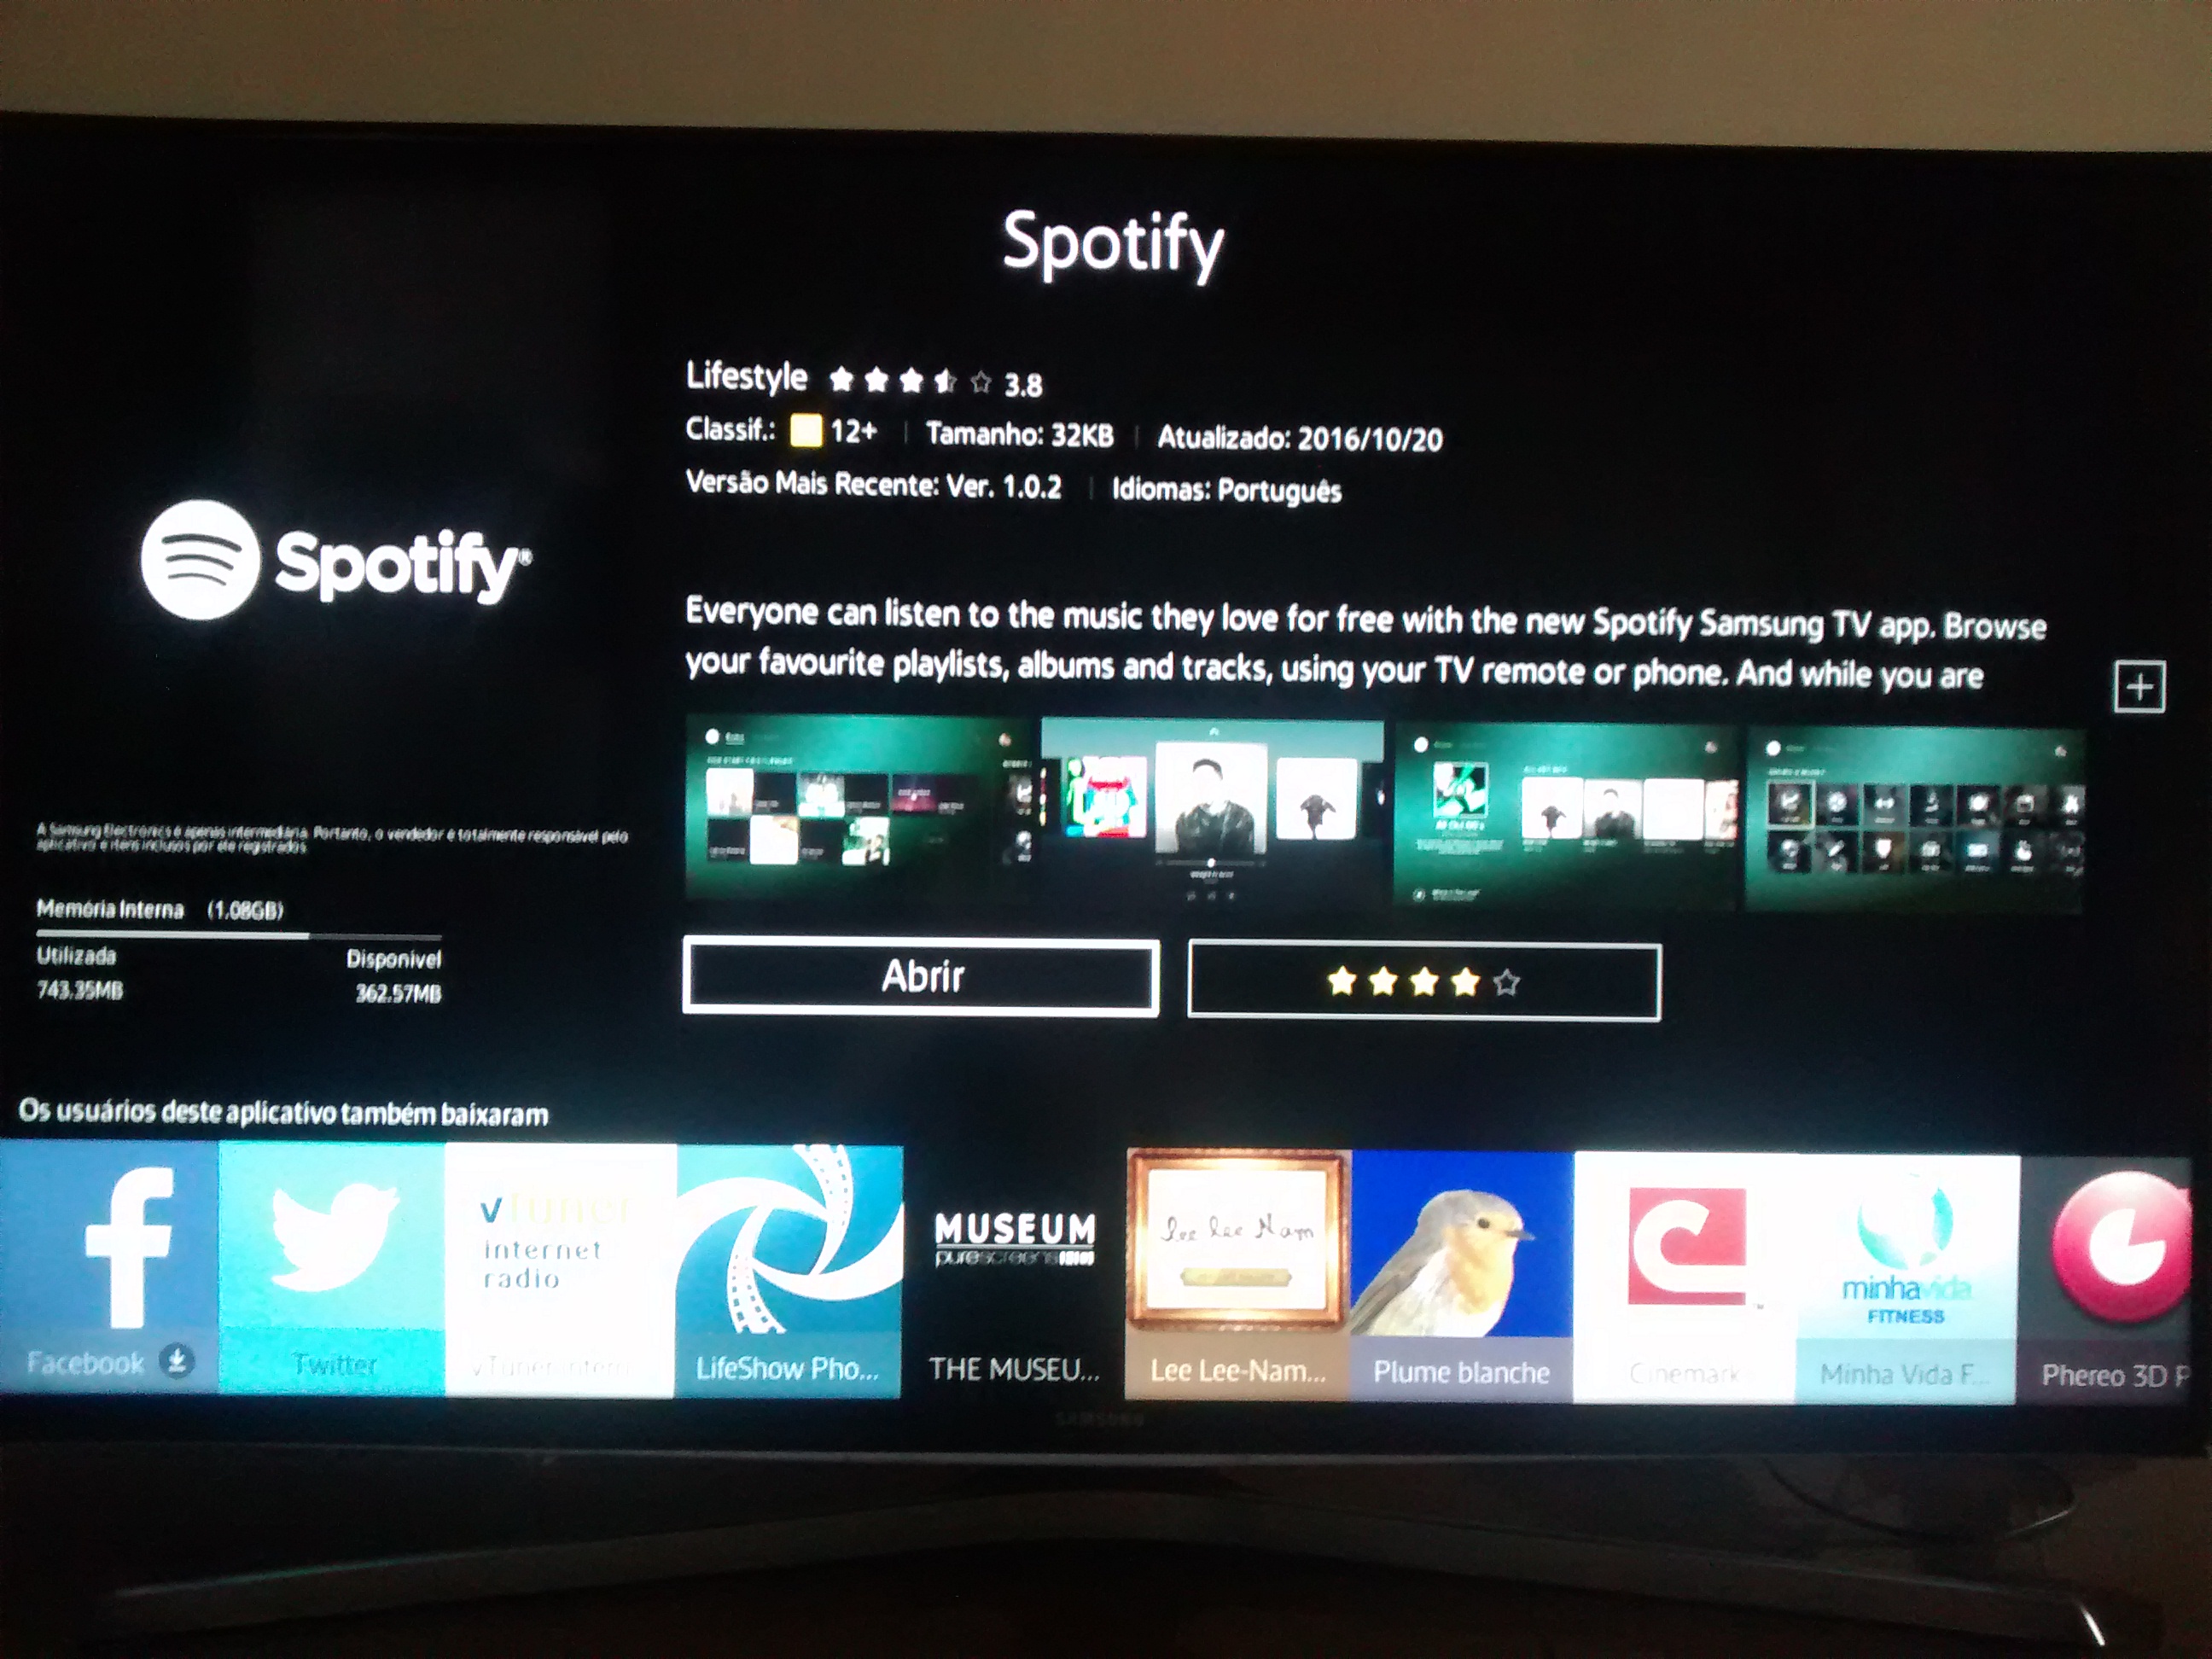 Samsung] Spotify for Samsung TV - Tizen OS - The Spotify Community